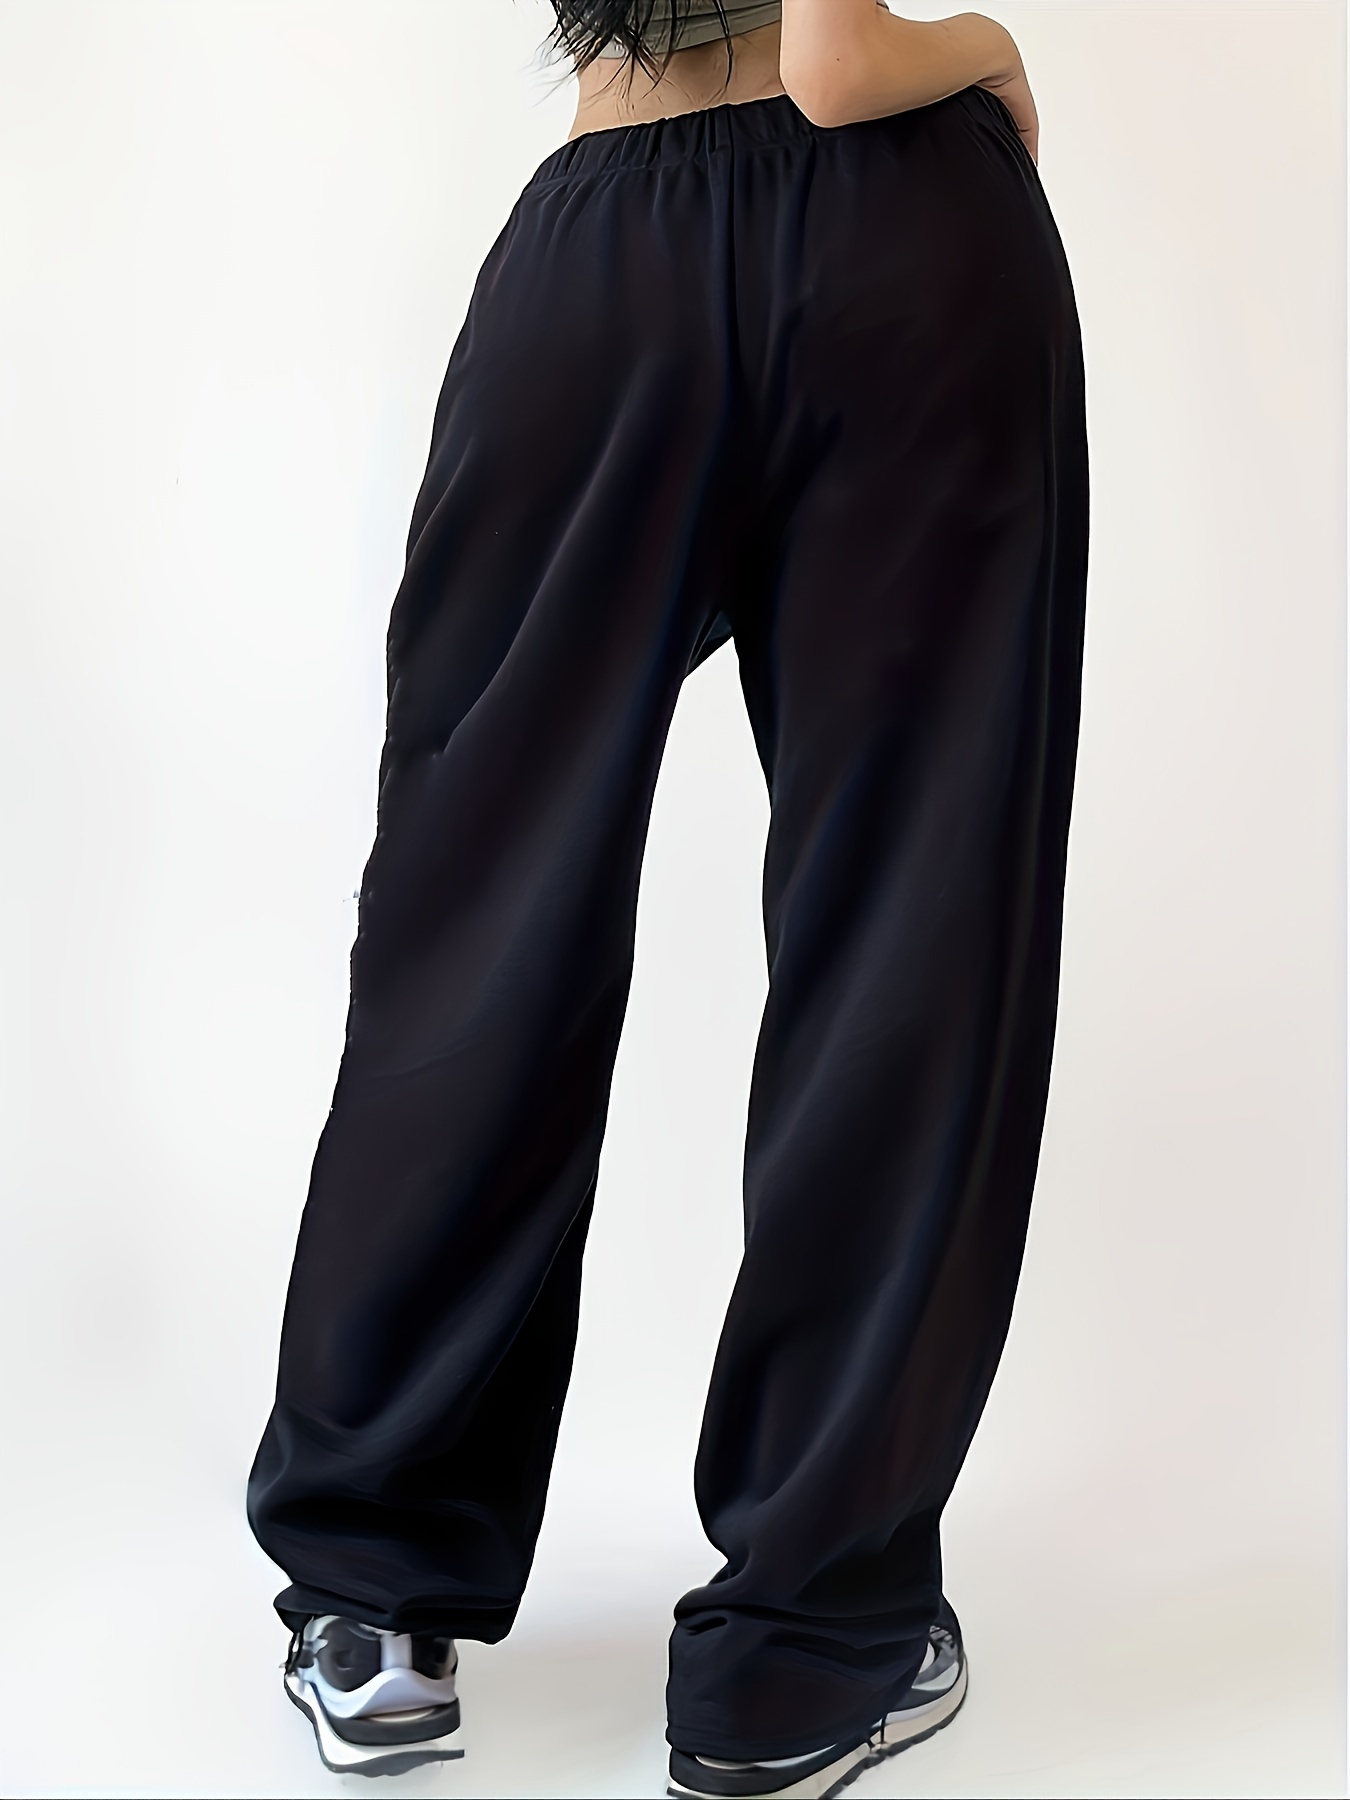 YWDJ Baggy Wide Leg Sweatpants Women Casual Slim High Elastic Waist Solid  Color Sports Yoga Flare Pants Black L 